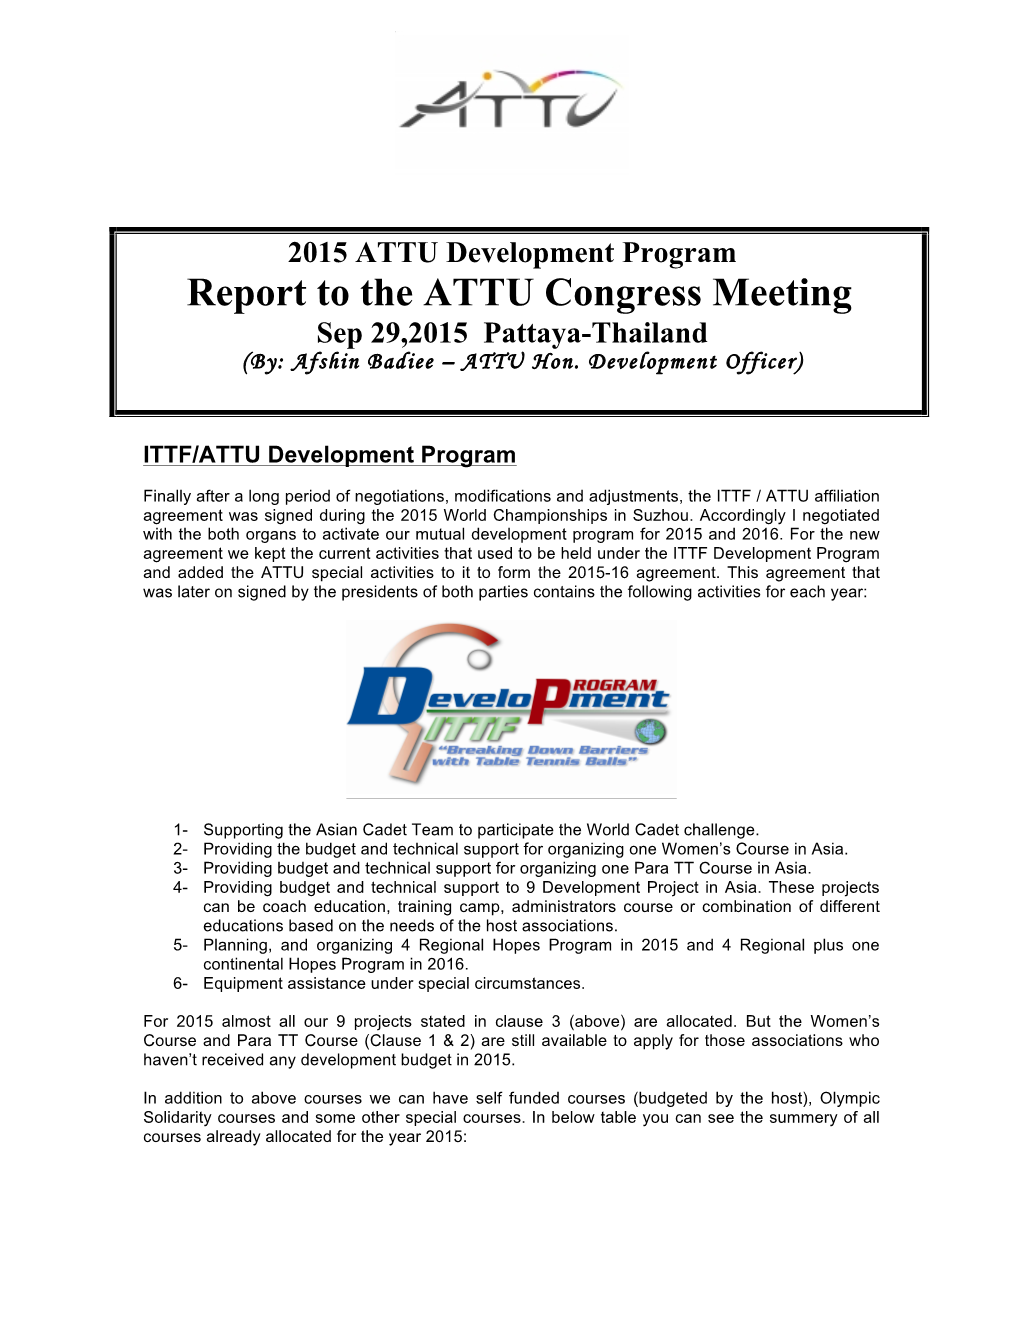 2015 ATTU Development Program Report to the ATTU Congress Meeting Sep 29,2015 Pattaya-Thailand (By: Afshin Badiee – ATTU Hon